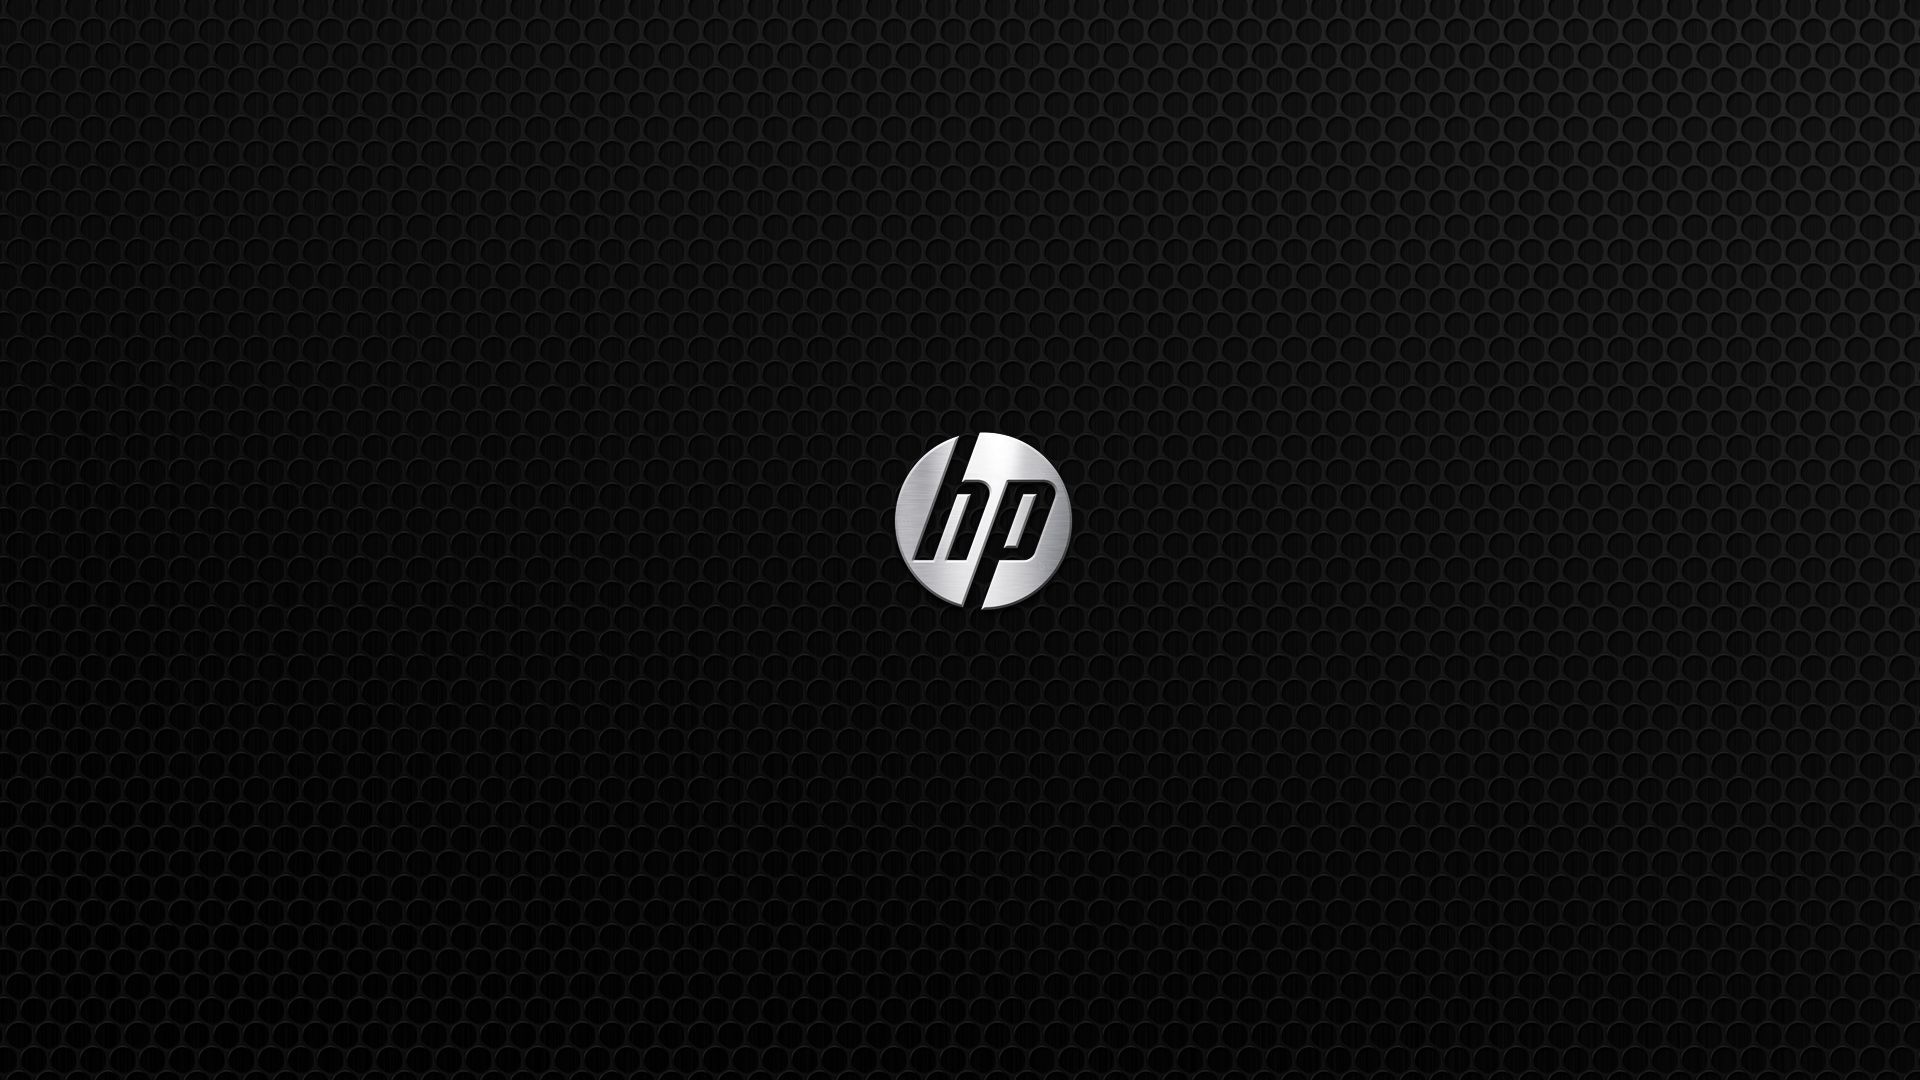 HP Black Wallpaper Free HP Black Background